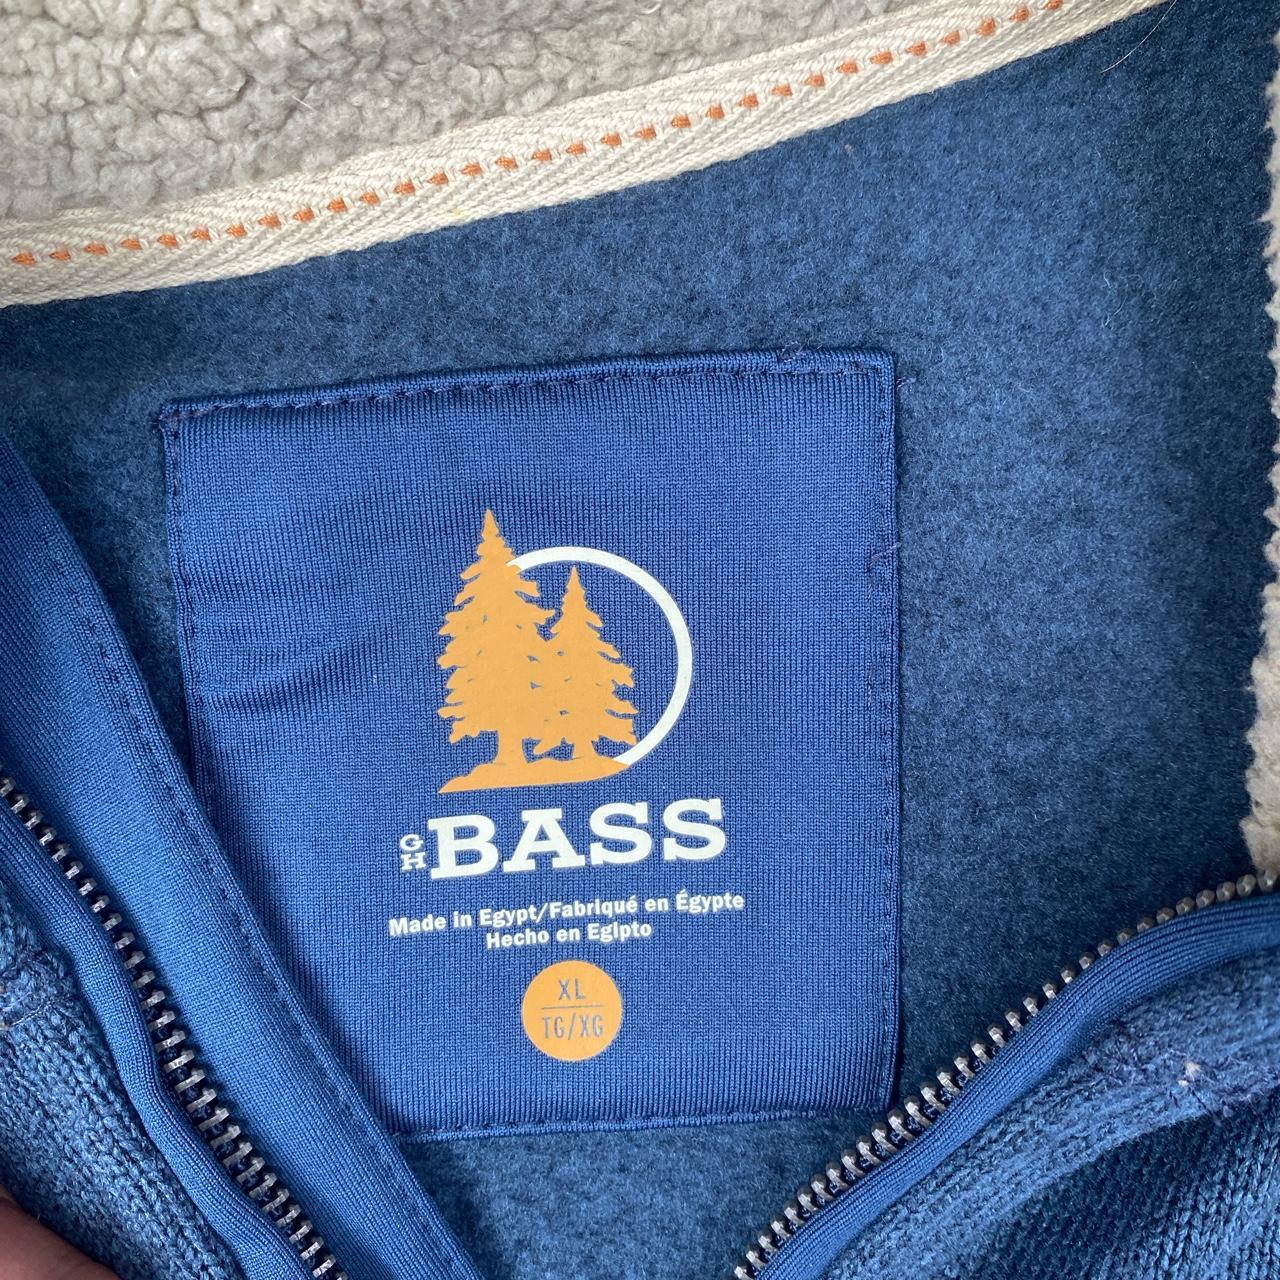 Product Image 2 - Navy blue GH Bass Fleece